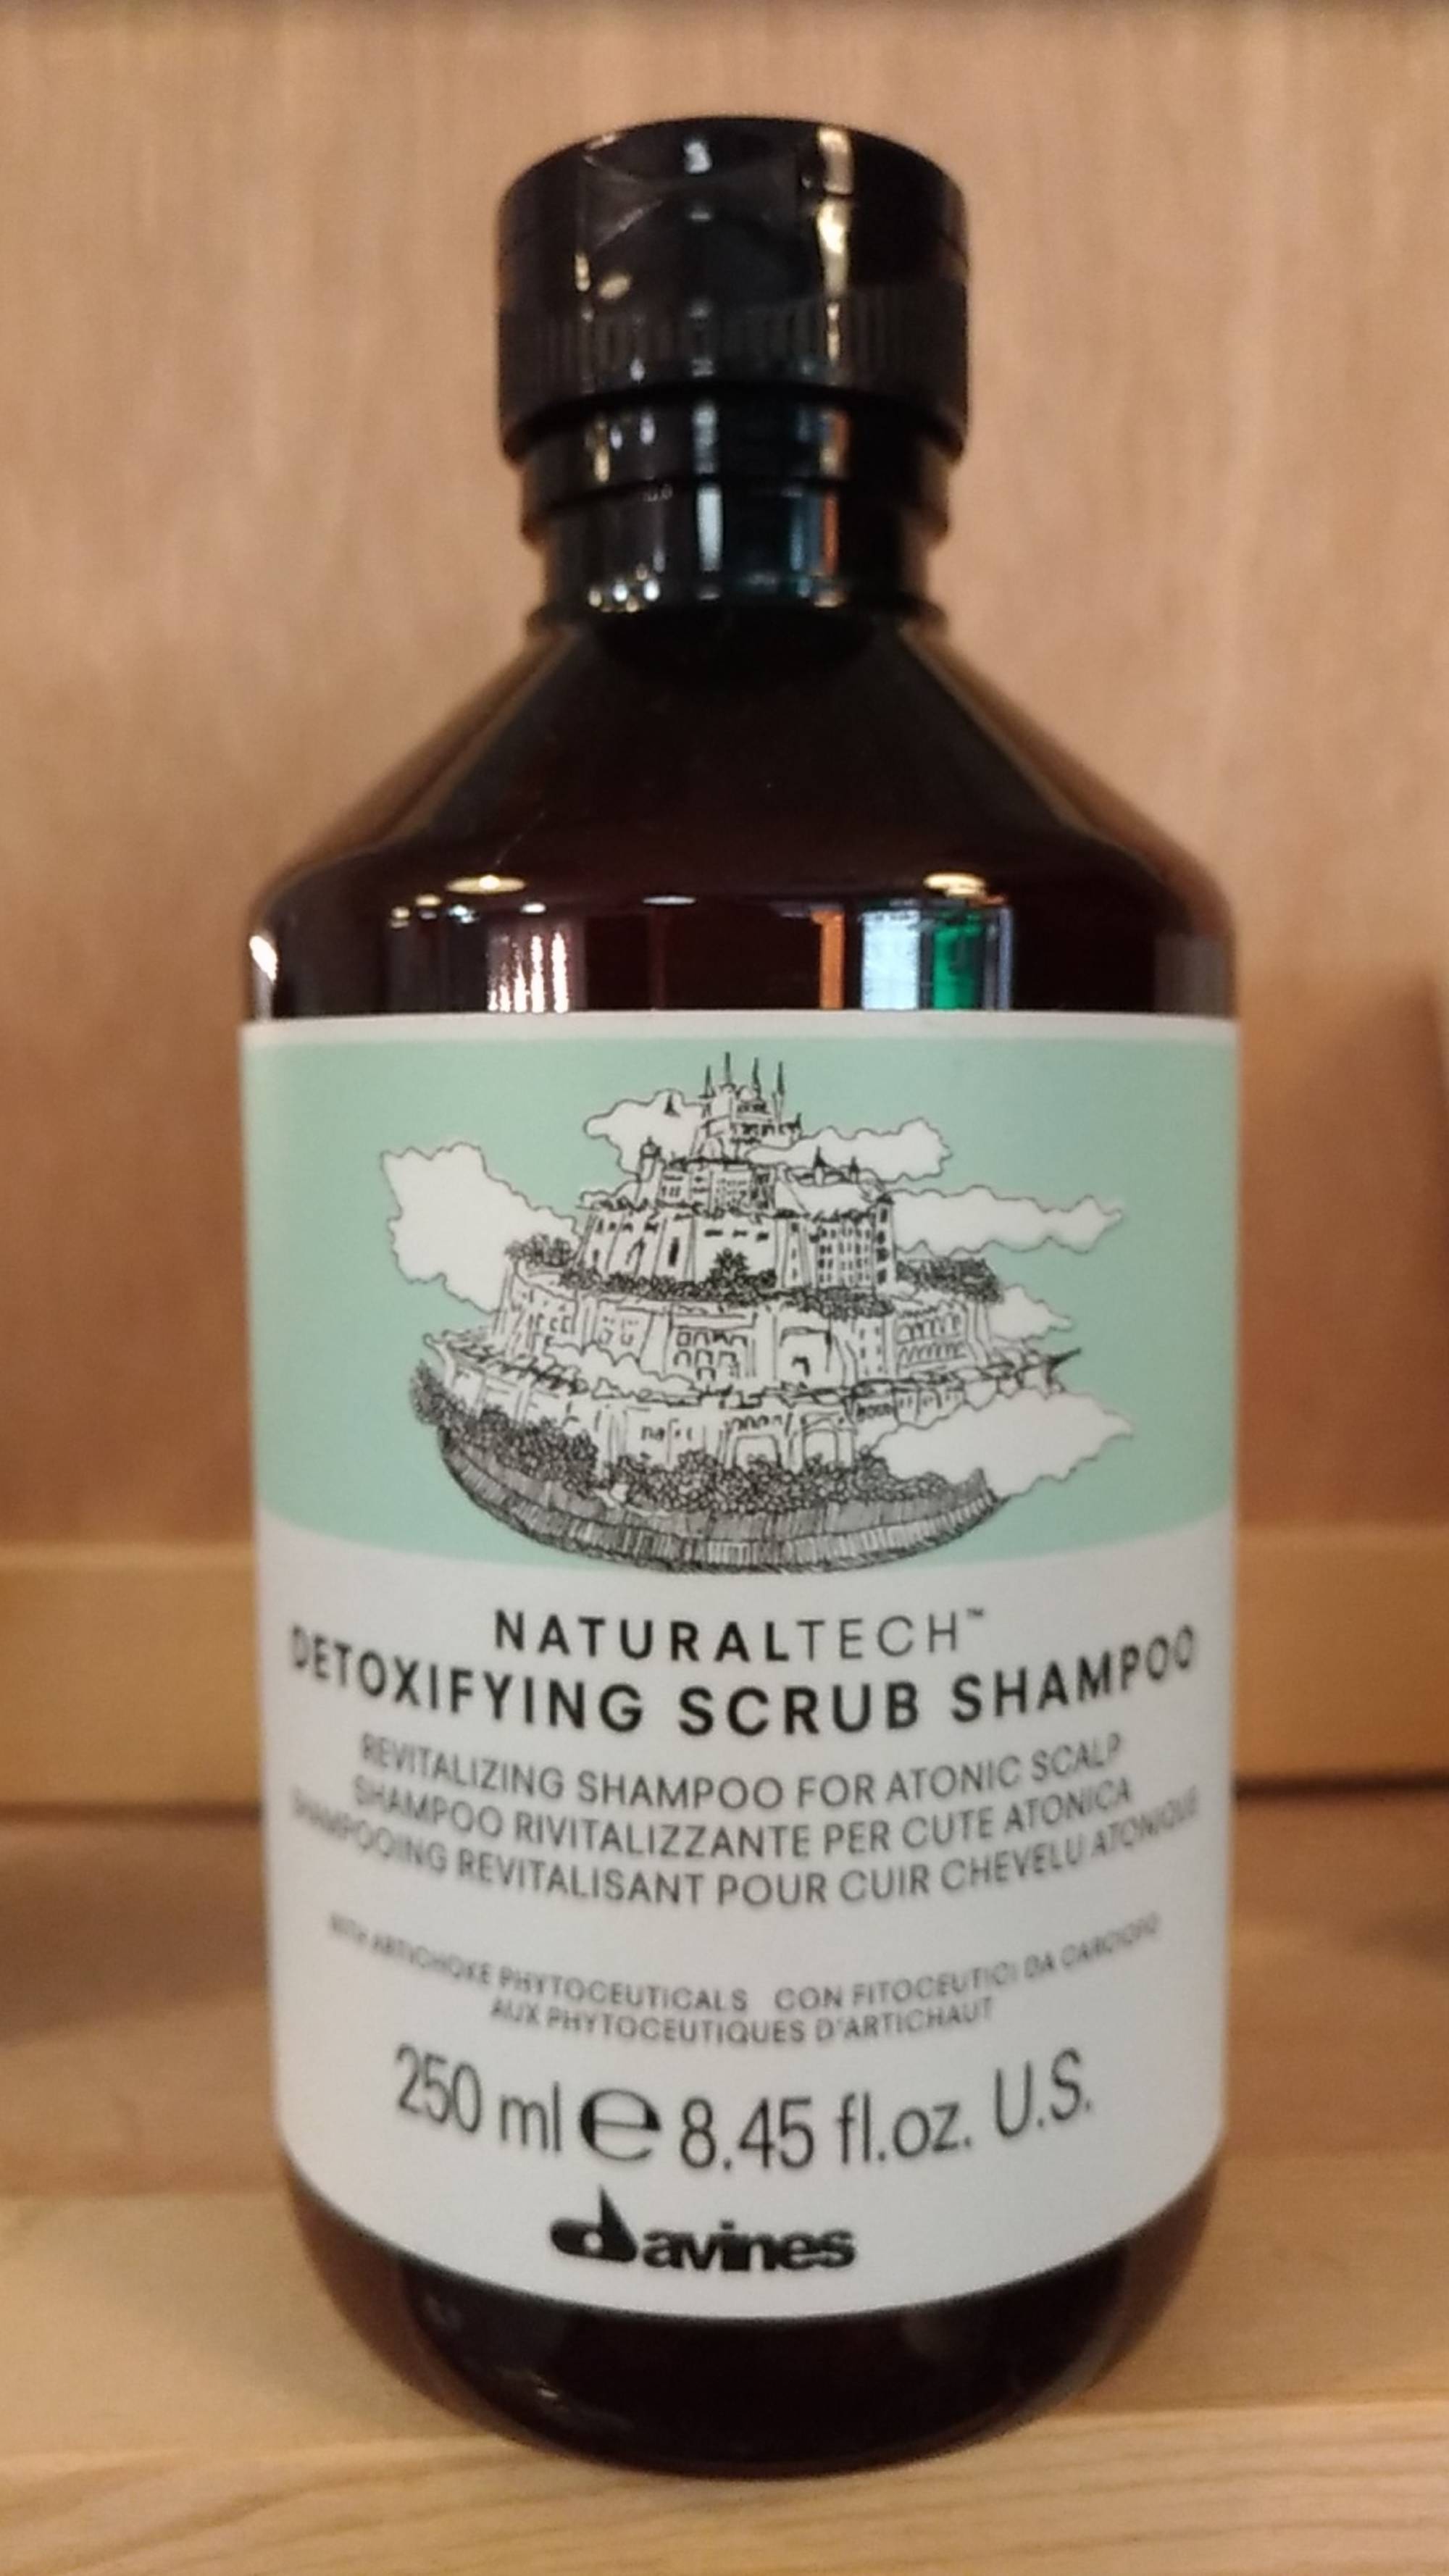 DAVINES - Naturaltech - Detoxifying scrub shampoo